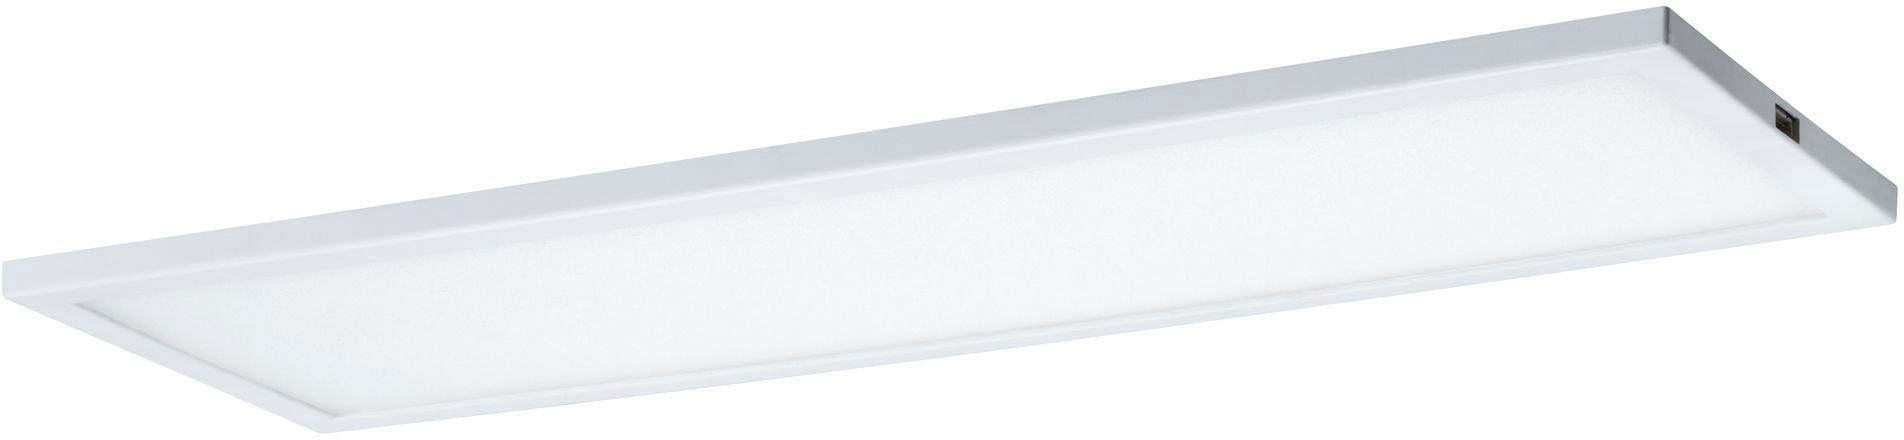 Paulmann Unterschrankleuchte Unterschrank-Panel LED Ace Weiß Weiß LED 10x30cm Ace fest 10x30cm 7,5W Basisset, 7,5W LED Warmweiß, Basisset Unterschrank-Panel integriert